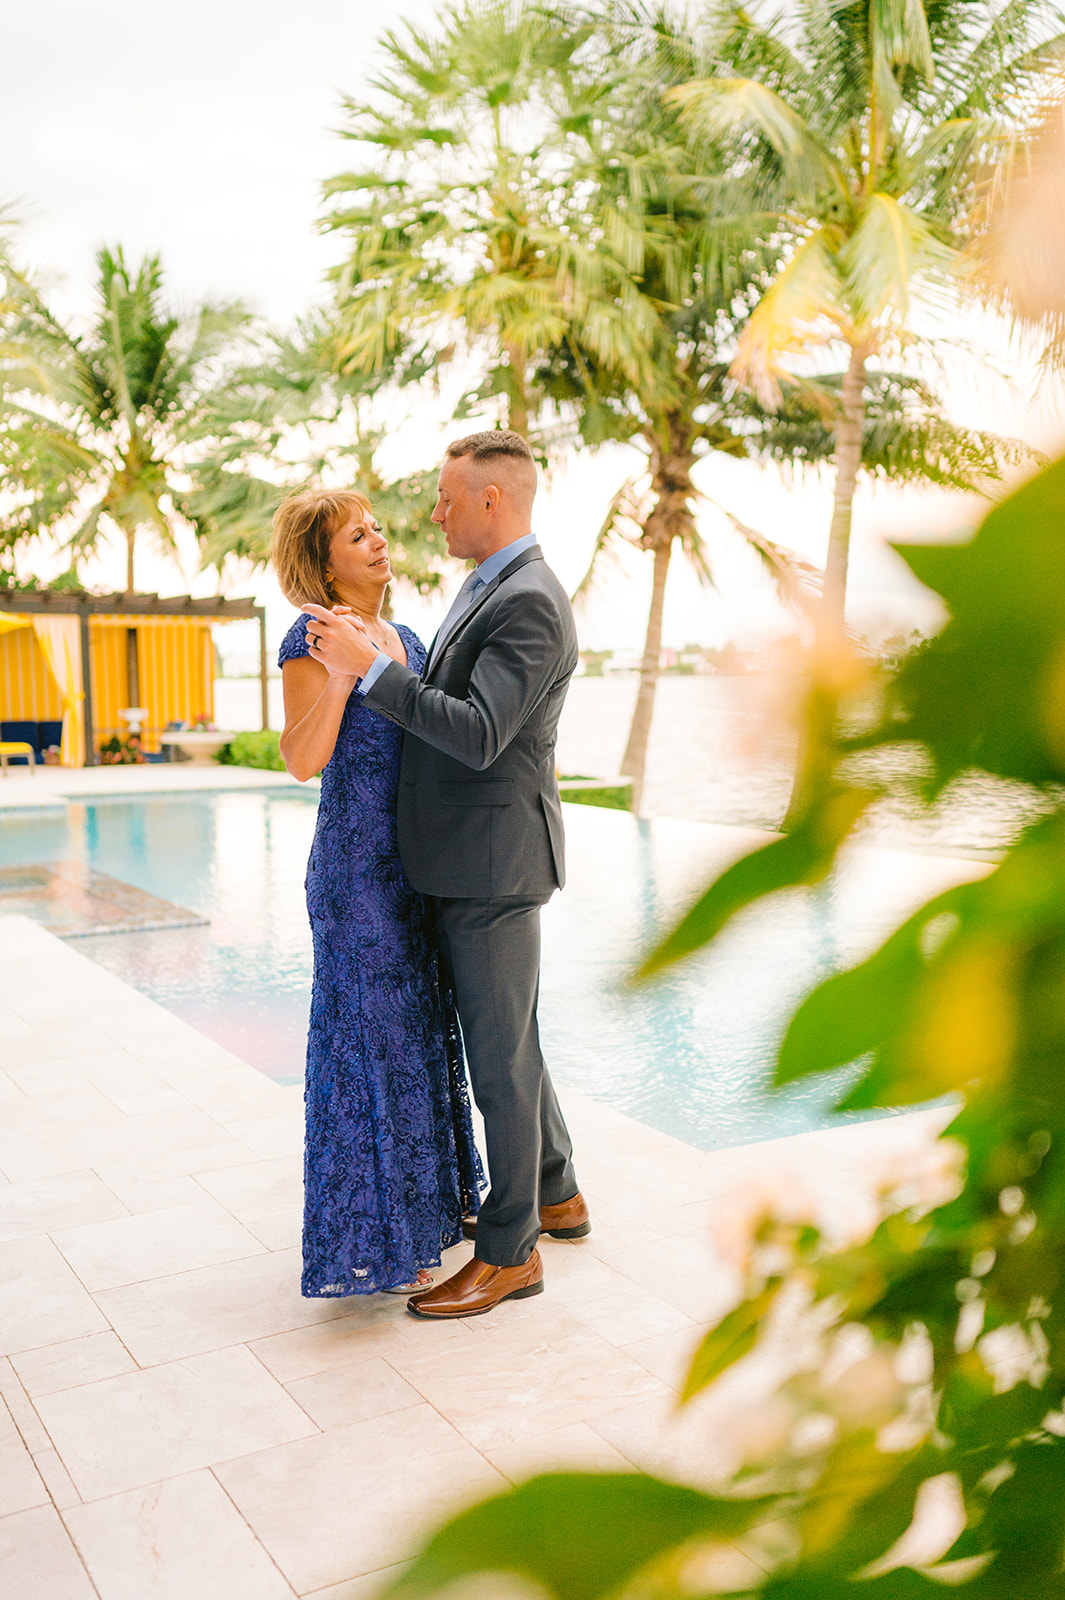 Naples Florida wedding photographer captures the beauty of the wedding reception venue
